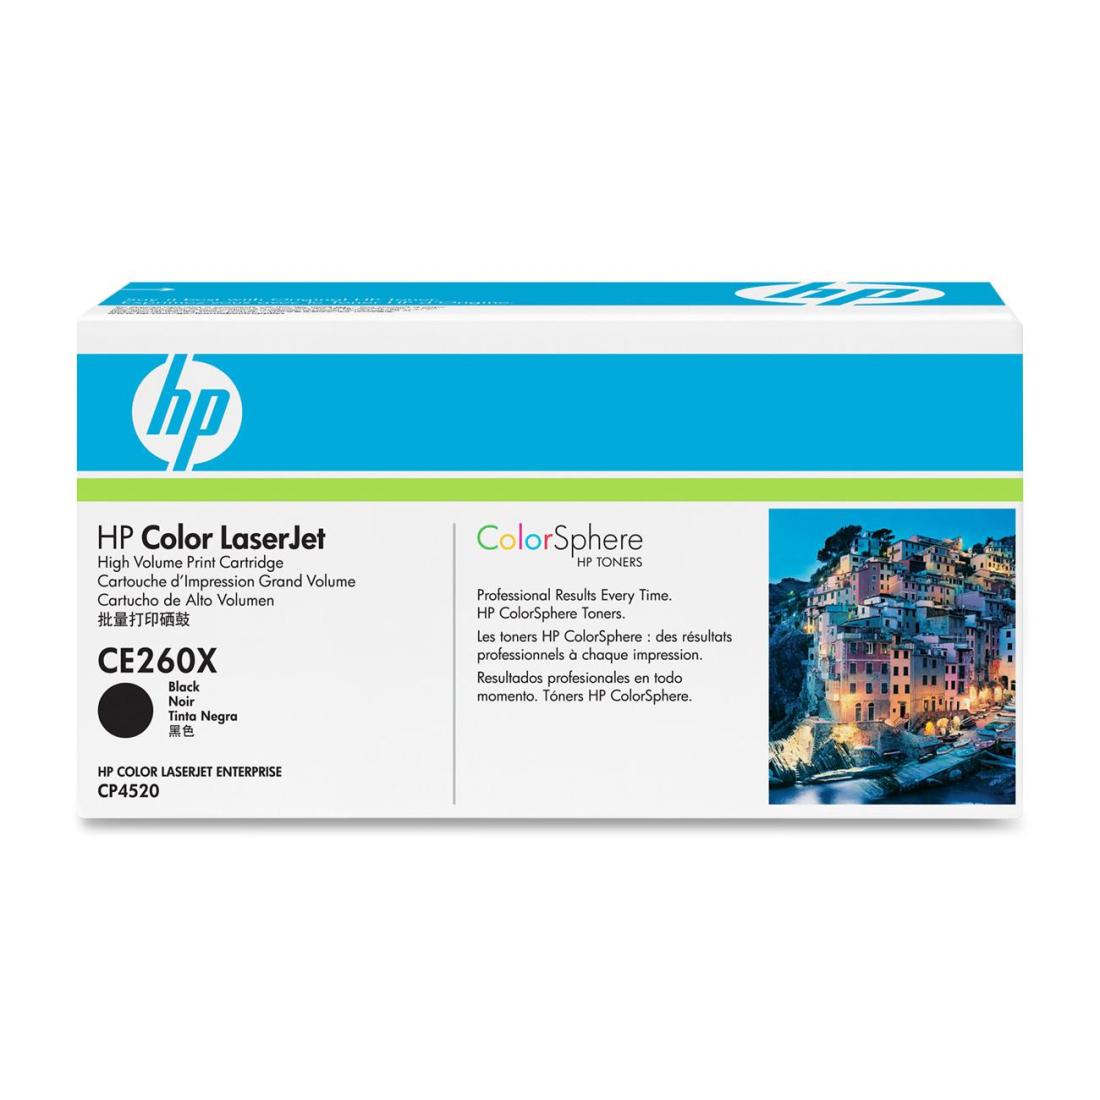 HP LaserJet CE260X Black Print Cartridge